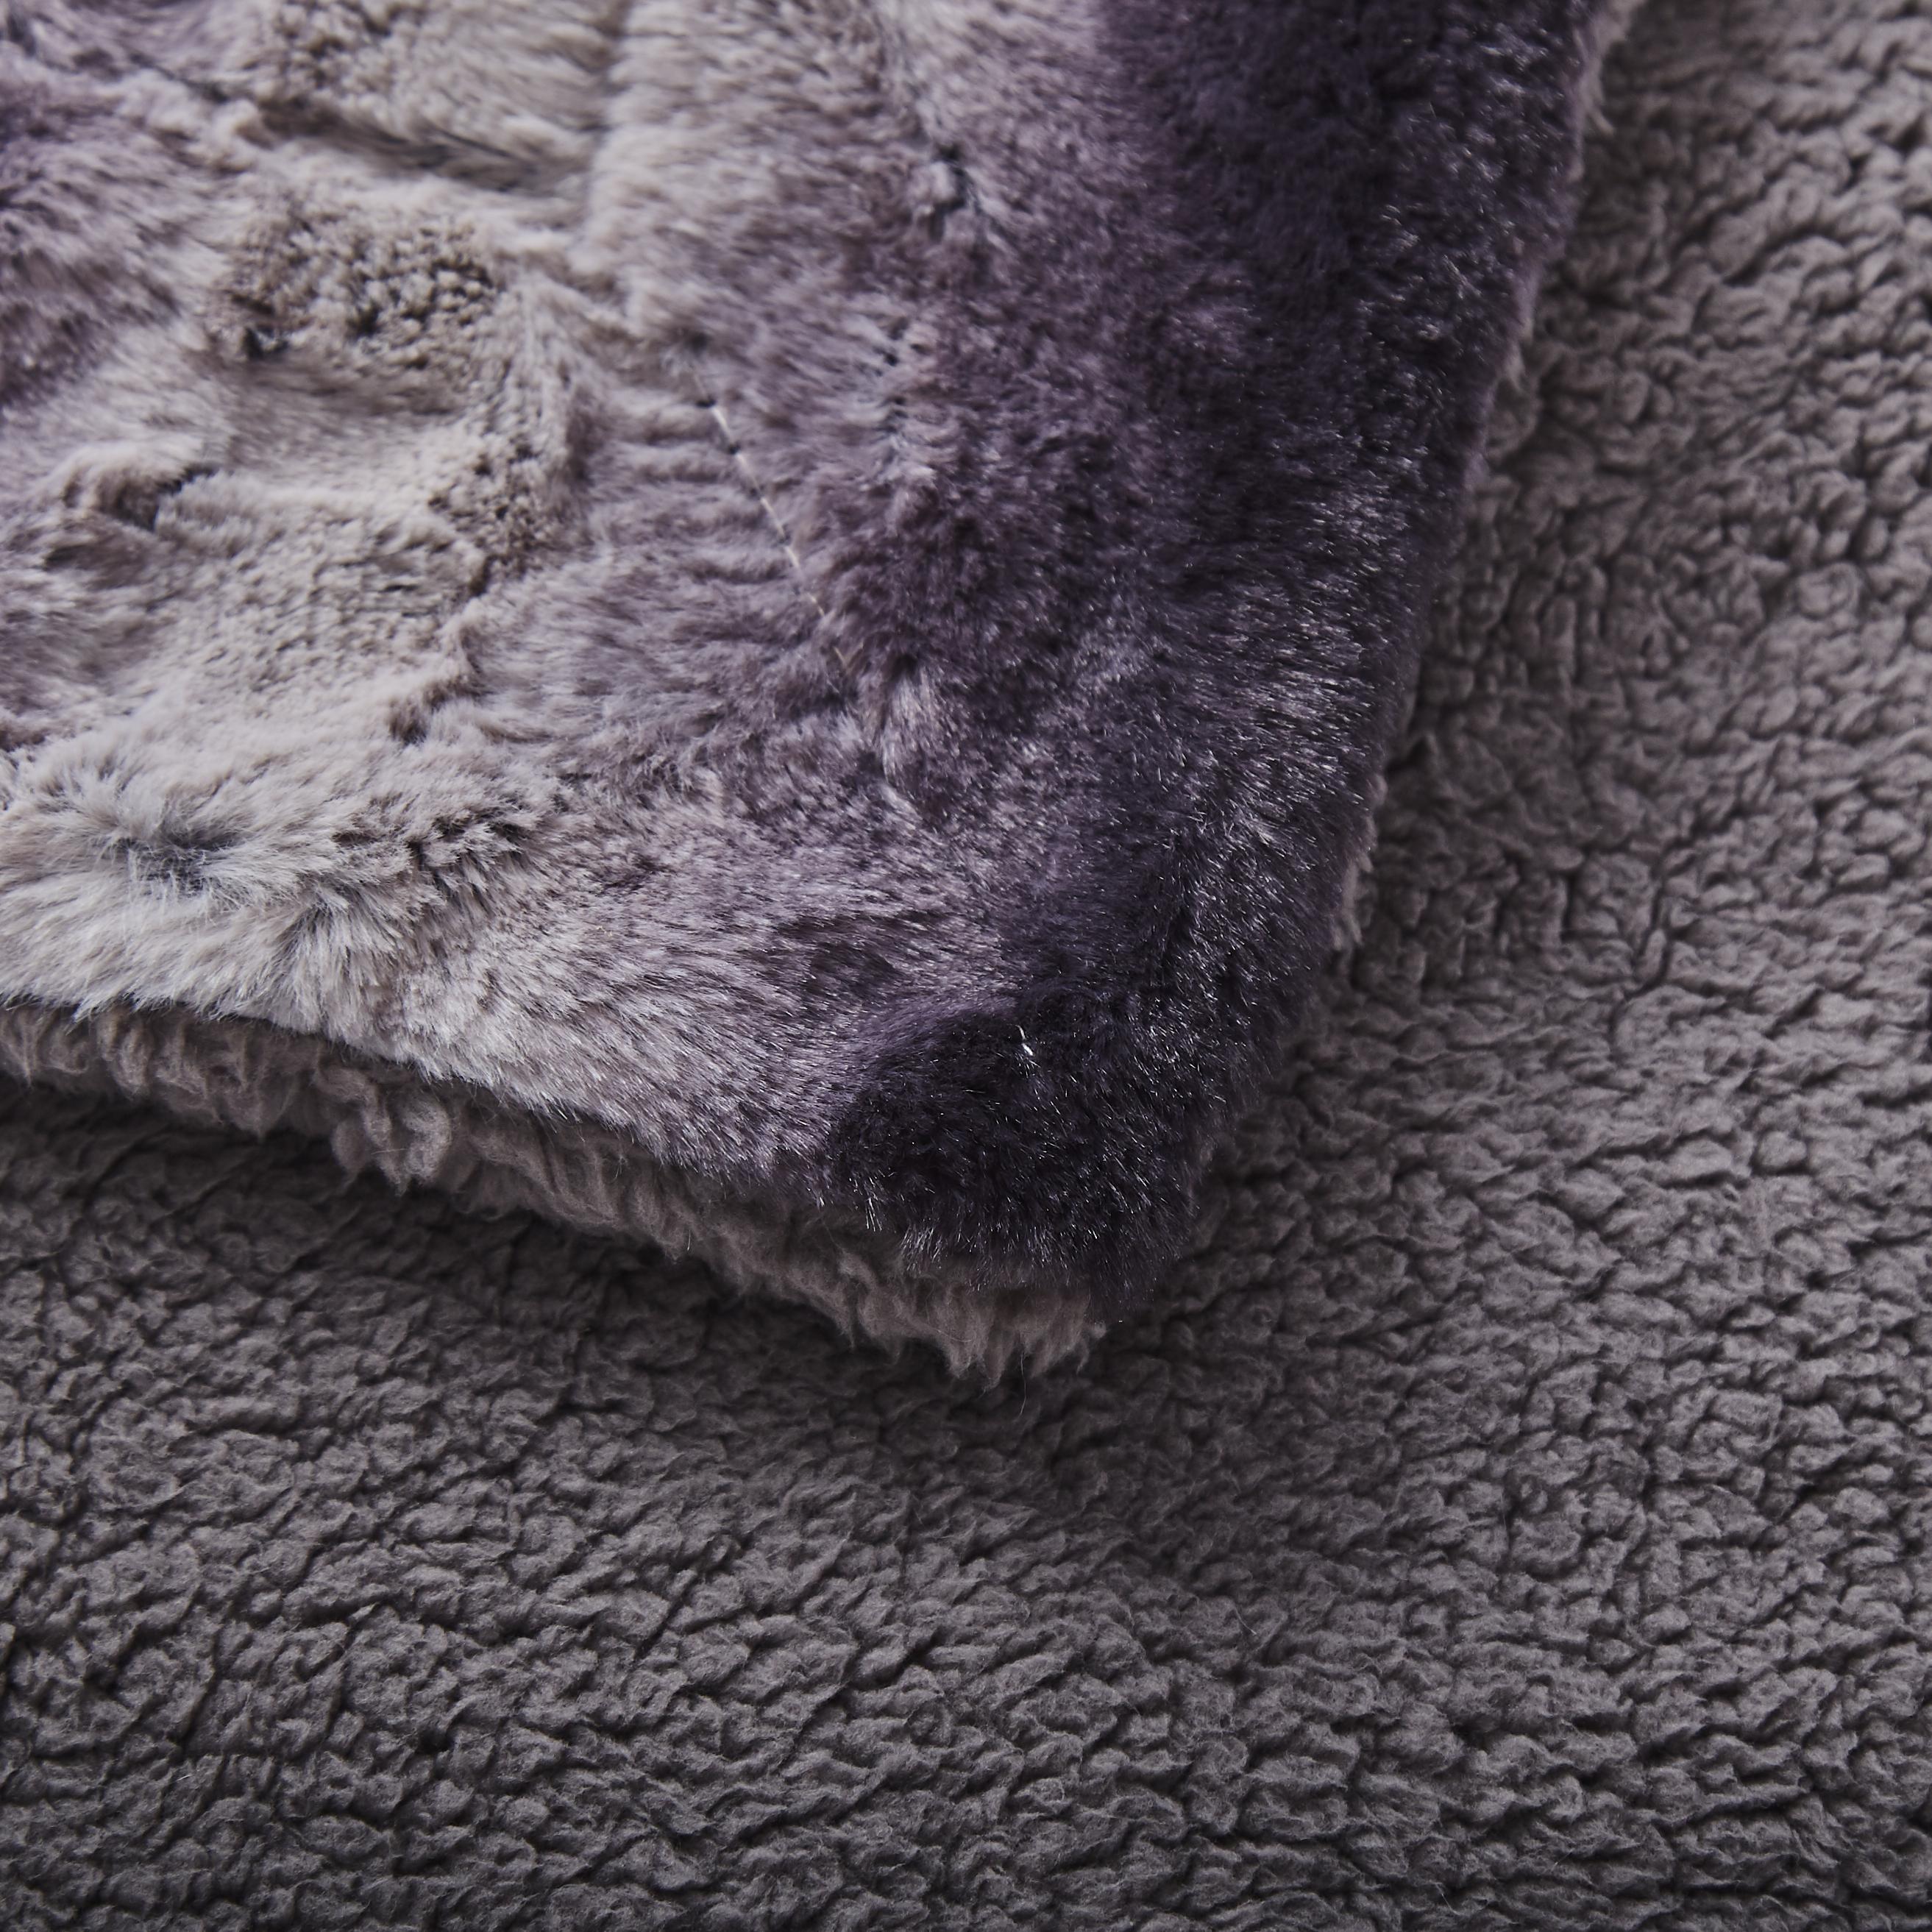 Tache Luxury Black Striped Faux Fur Throw Blanket (DY06) - Tache Home Fashion